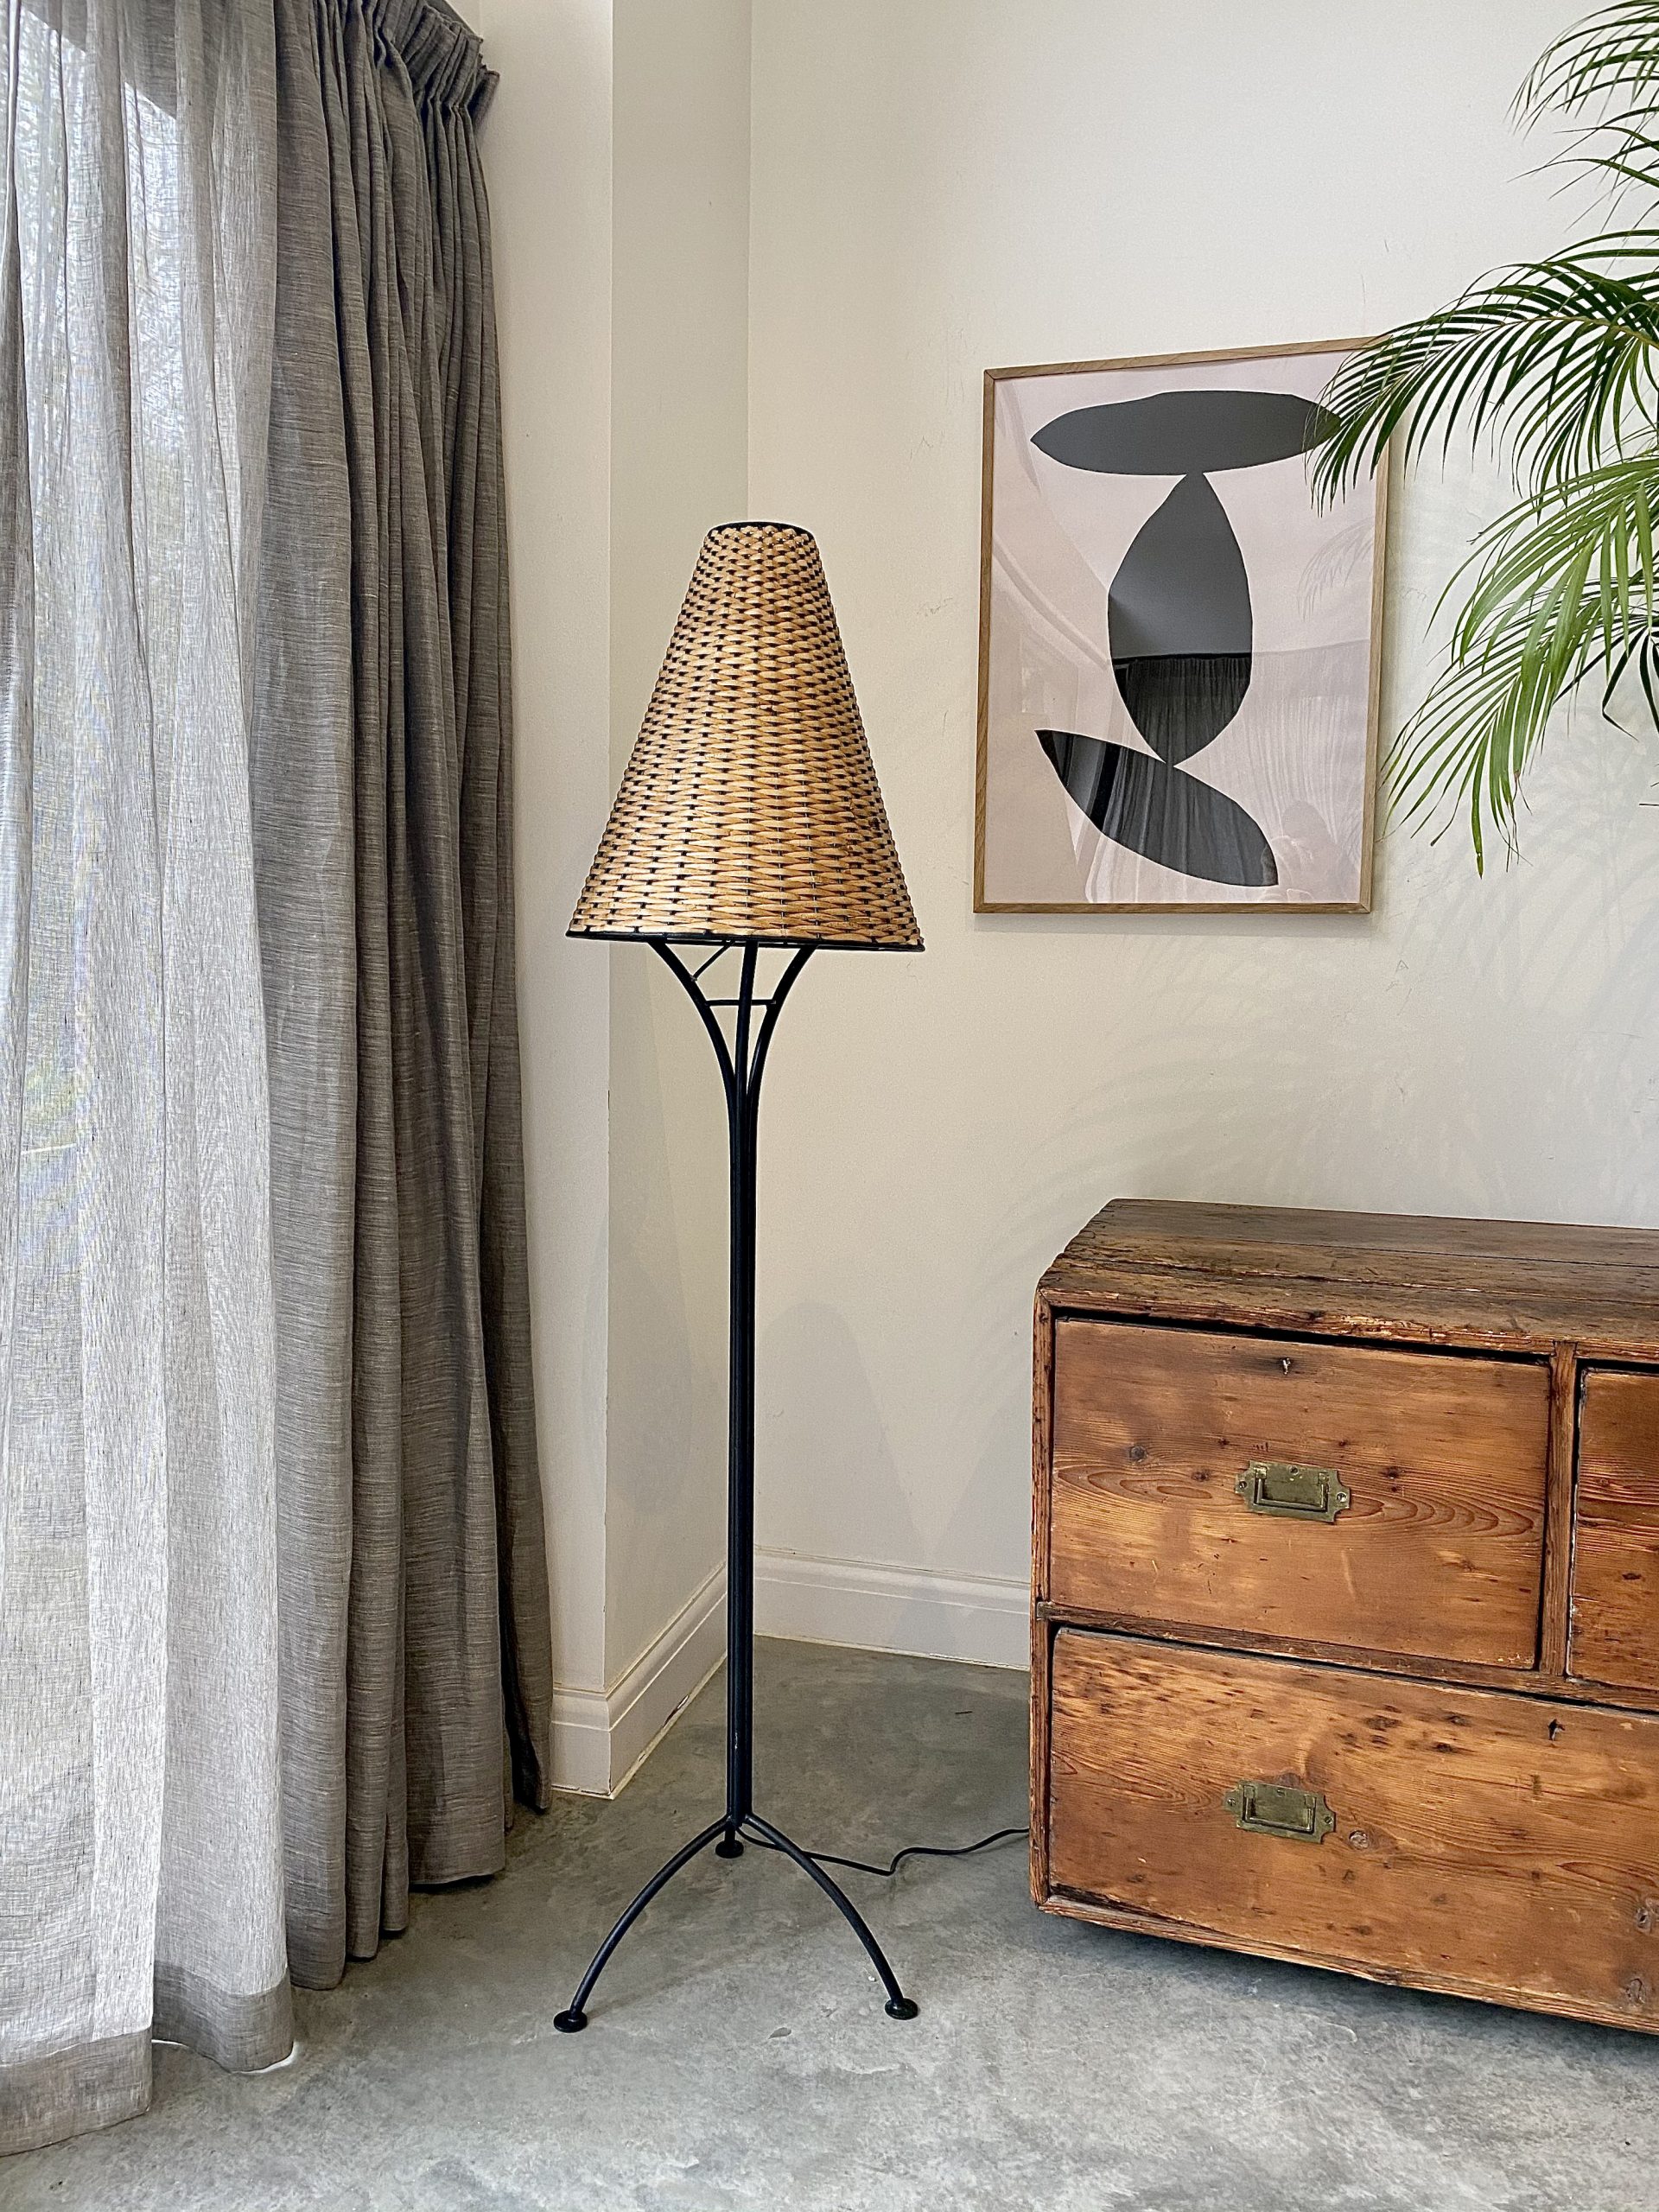 Mariposa Floor Lamp